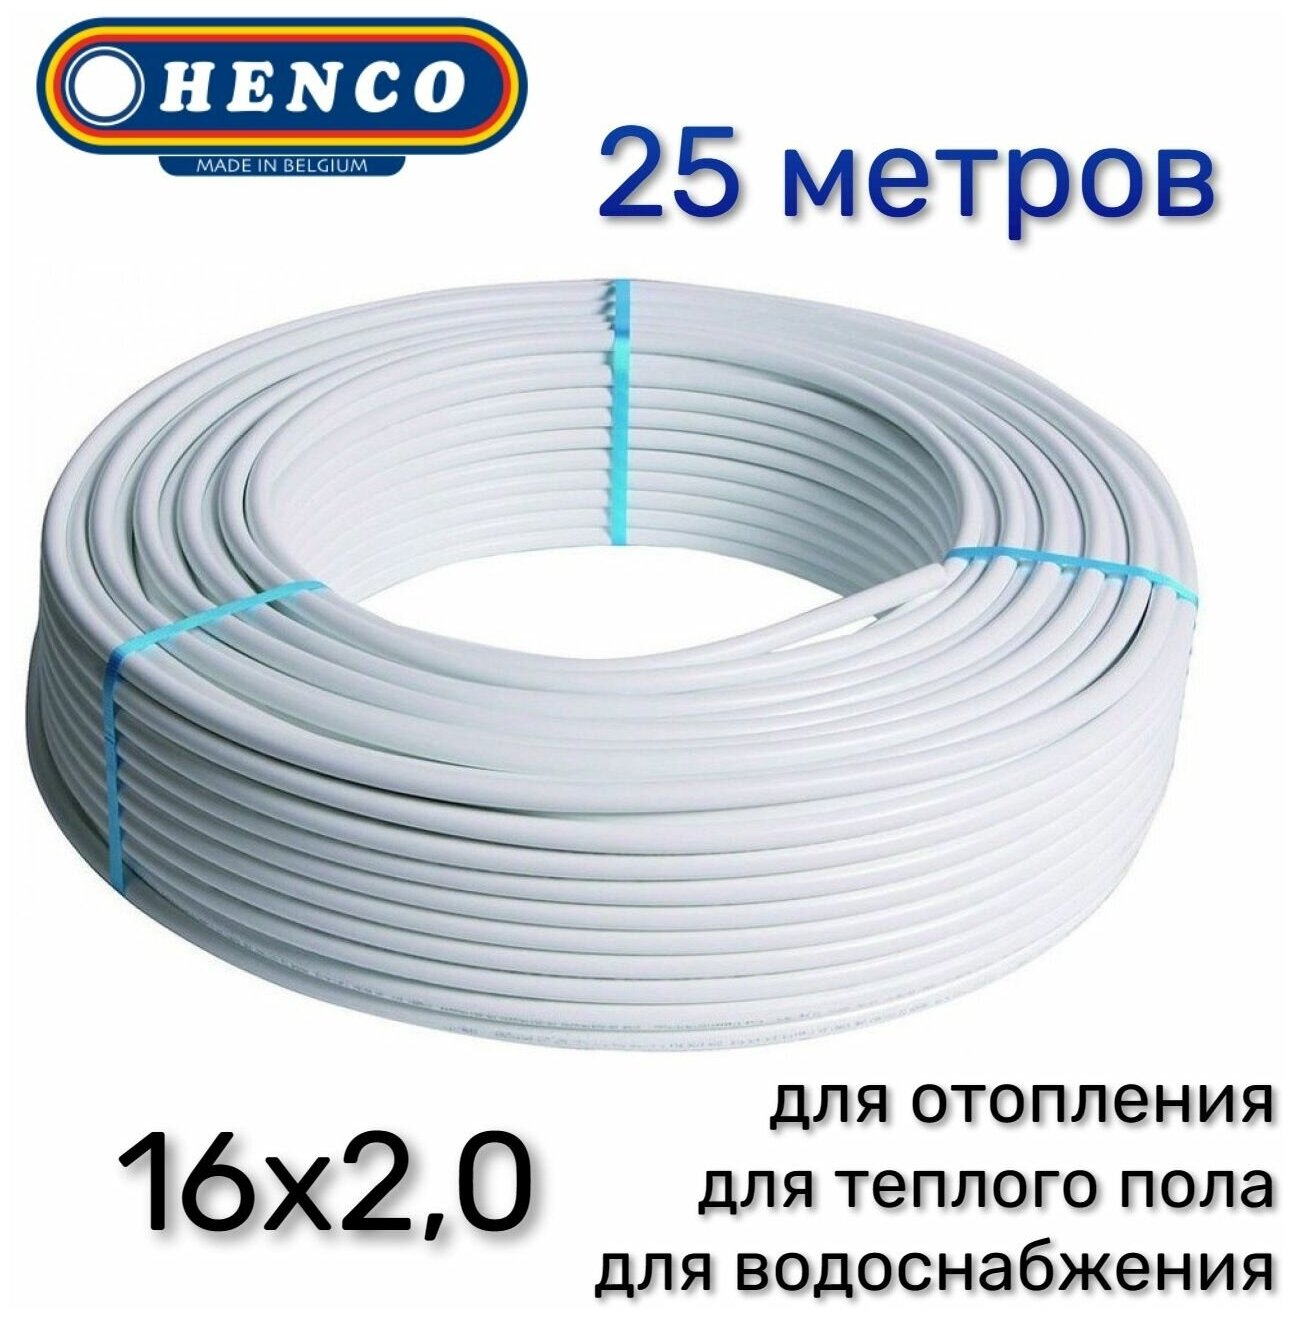 Труба металлопластиковая HENCO Standart 16x2,0 25 метров